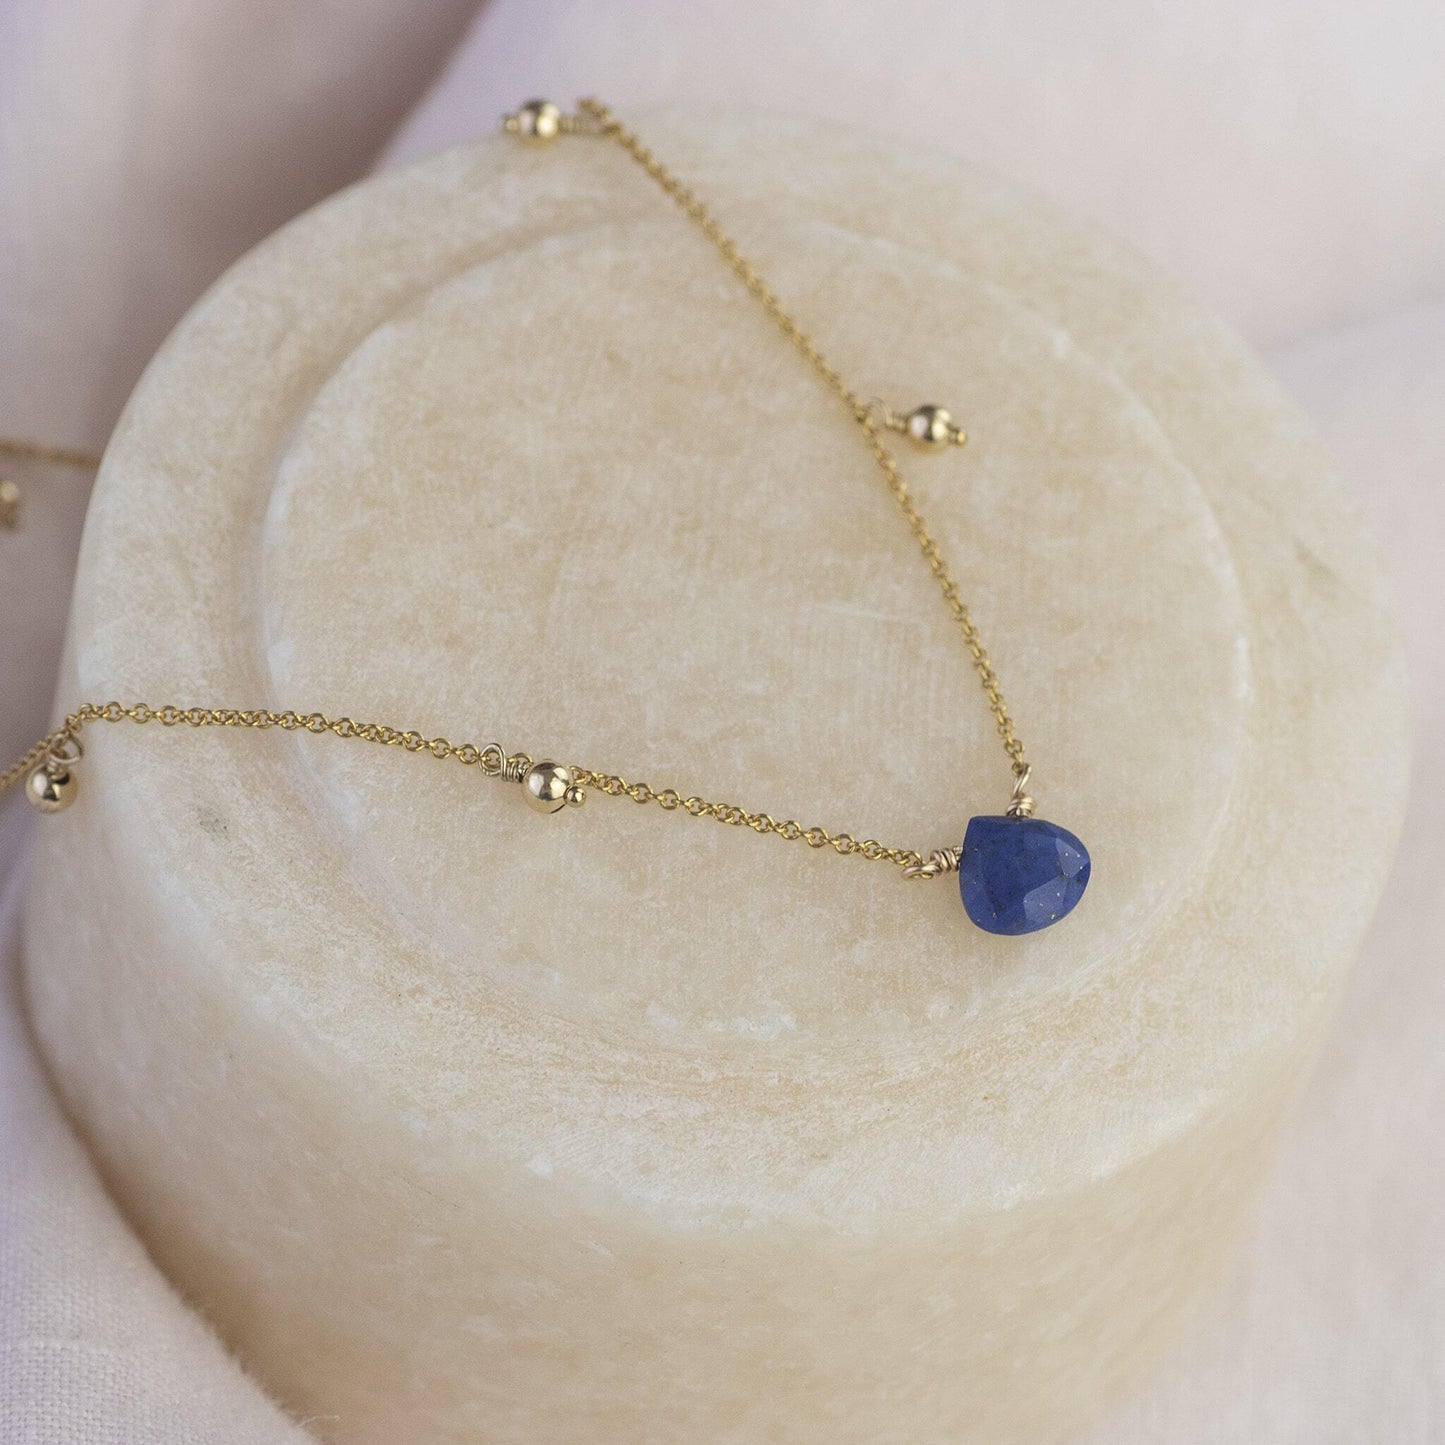 Lapis Lazuli Necklace - Courage, Wisdom & Fulfilment